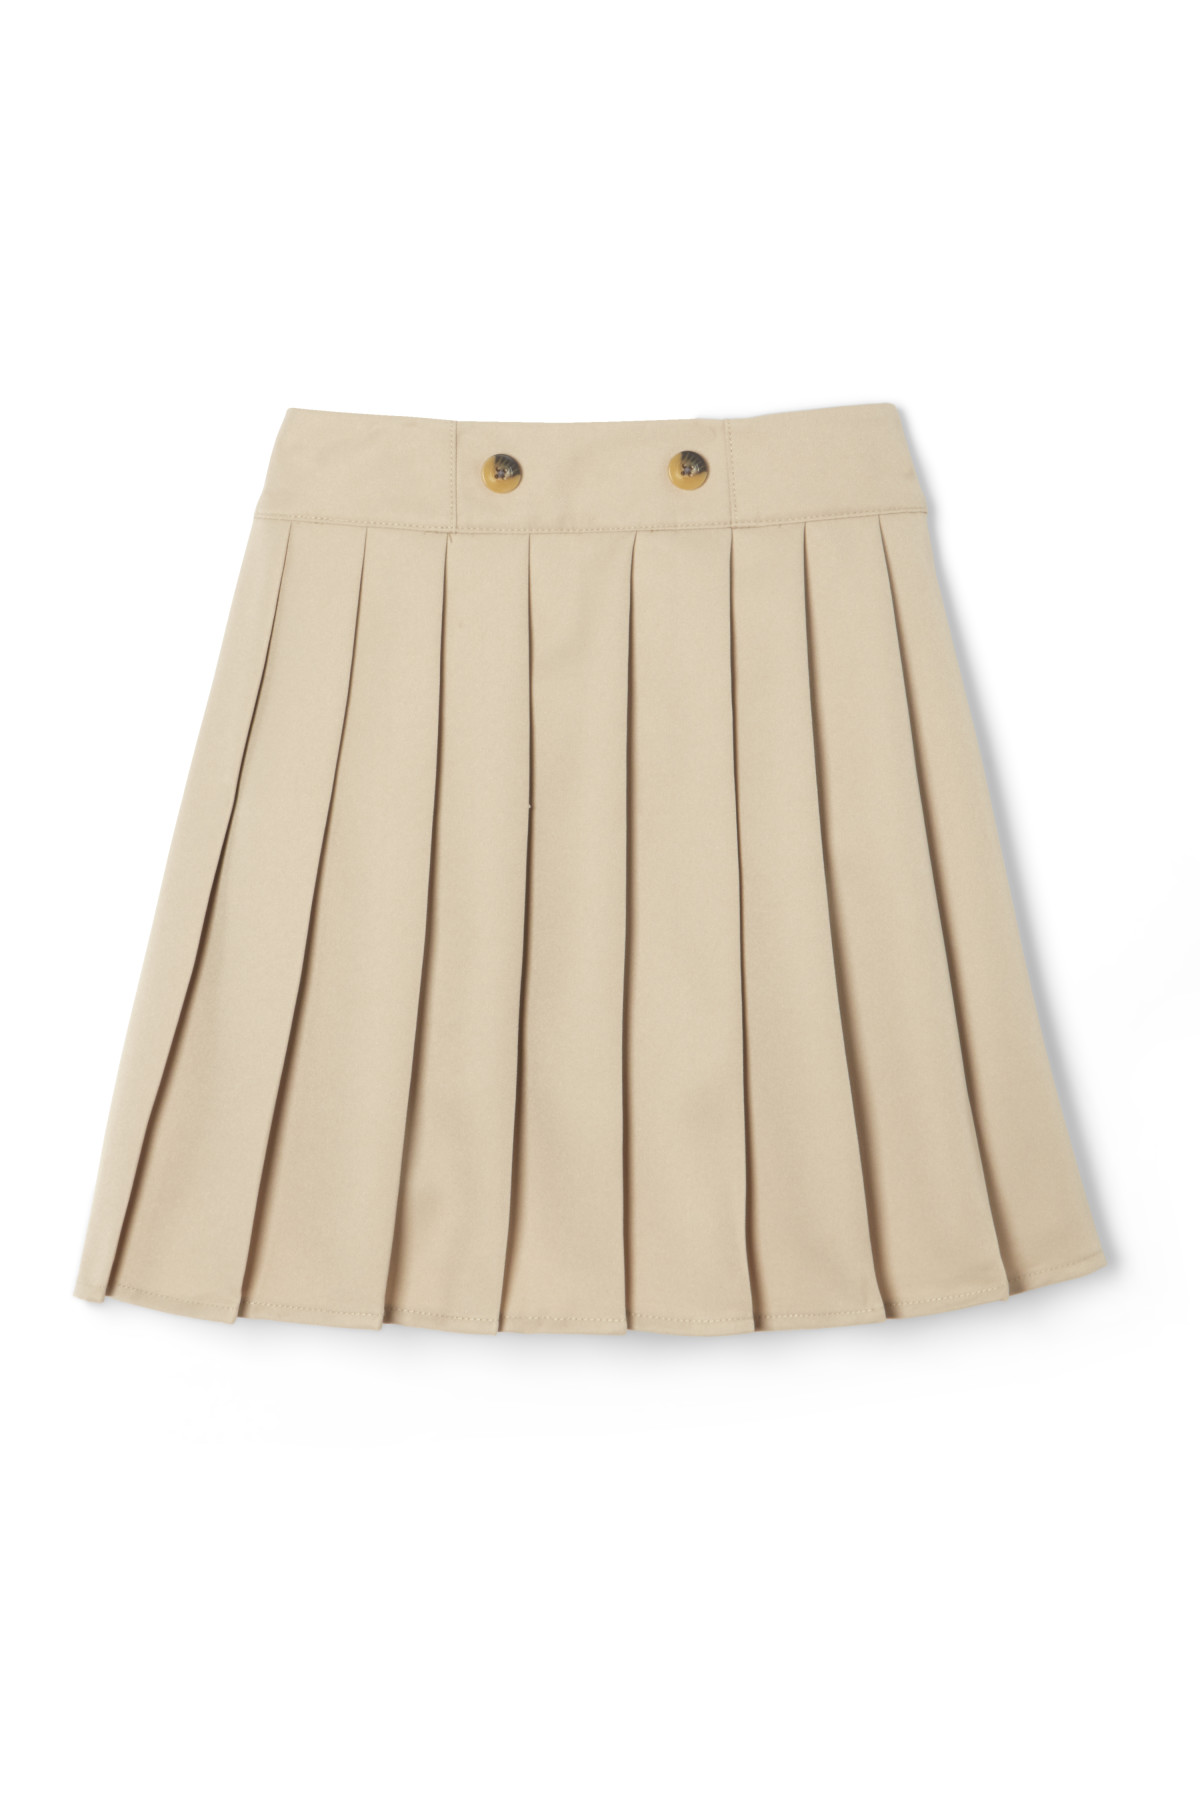 Khaki Pleated Skirt with Hidden Shorts French Toast School Uniform Girls Sz 12 